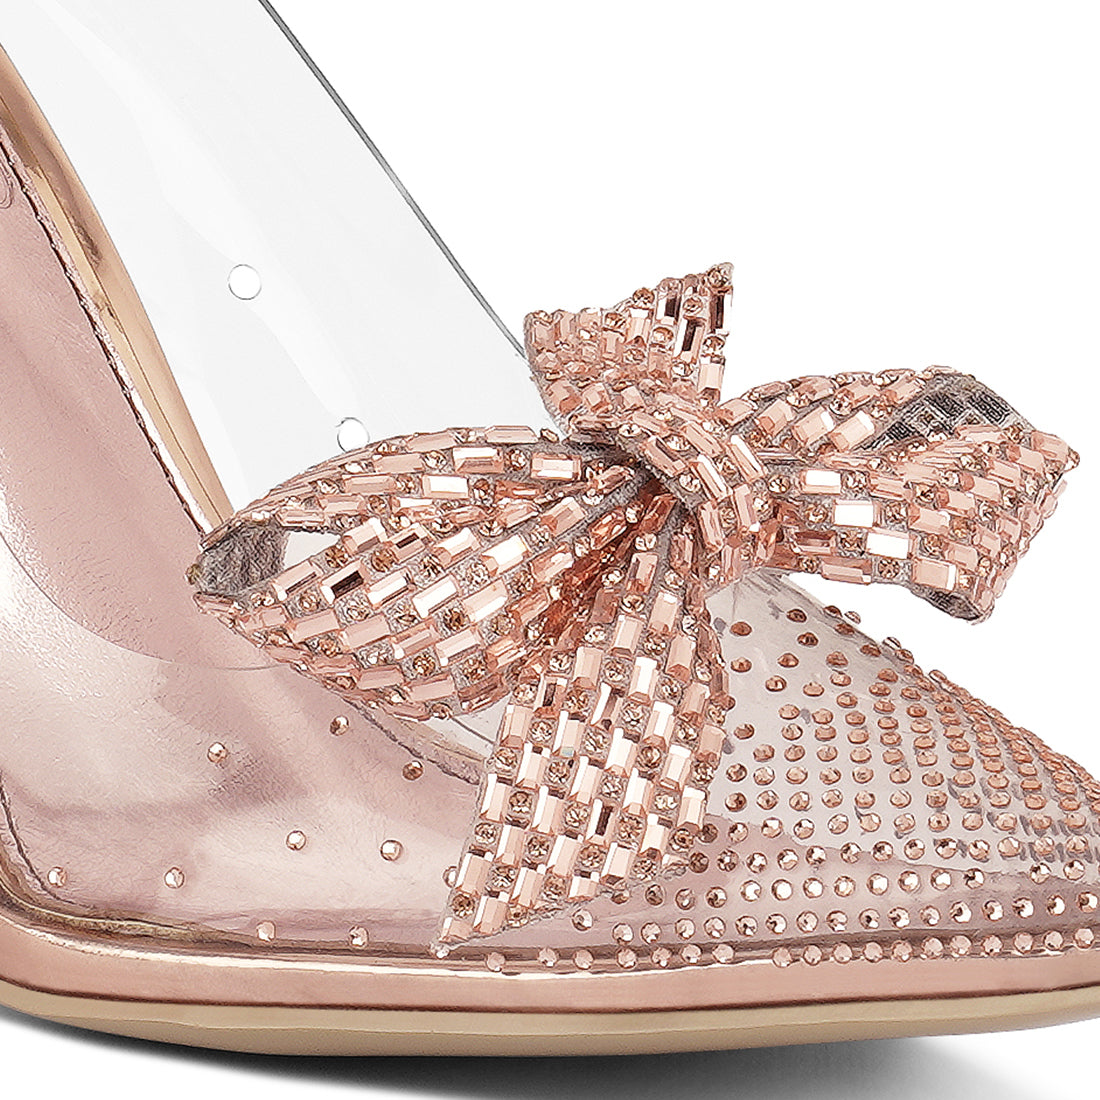 rhinestones embellished clear pump shoes#color_rose-gold